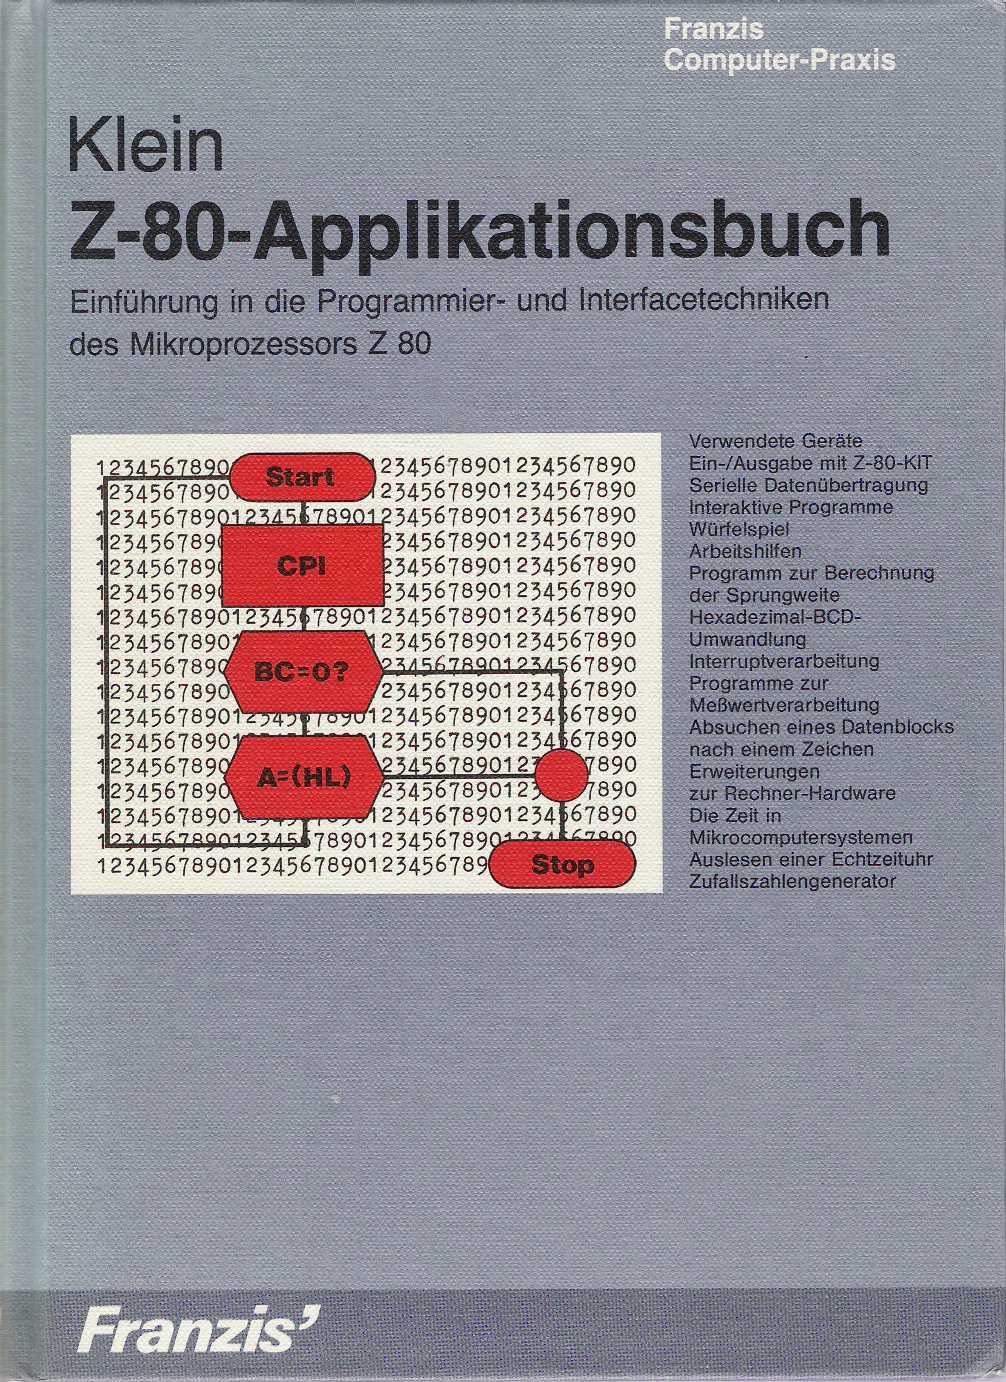 Z-80-Applikationsbuch image, screenshot or loading screen